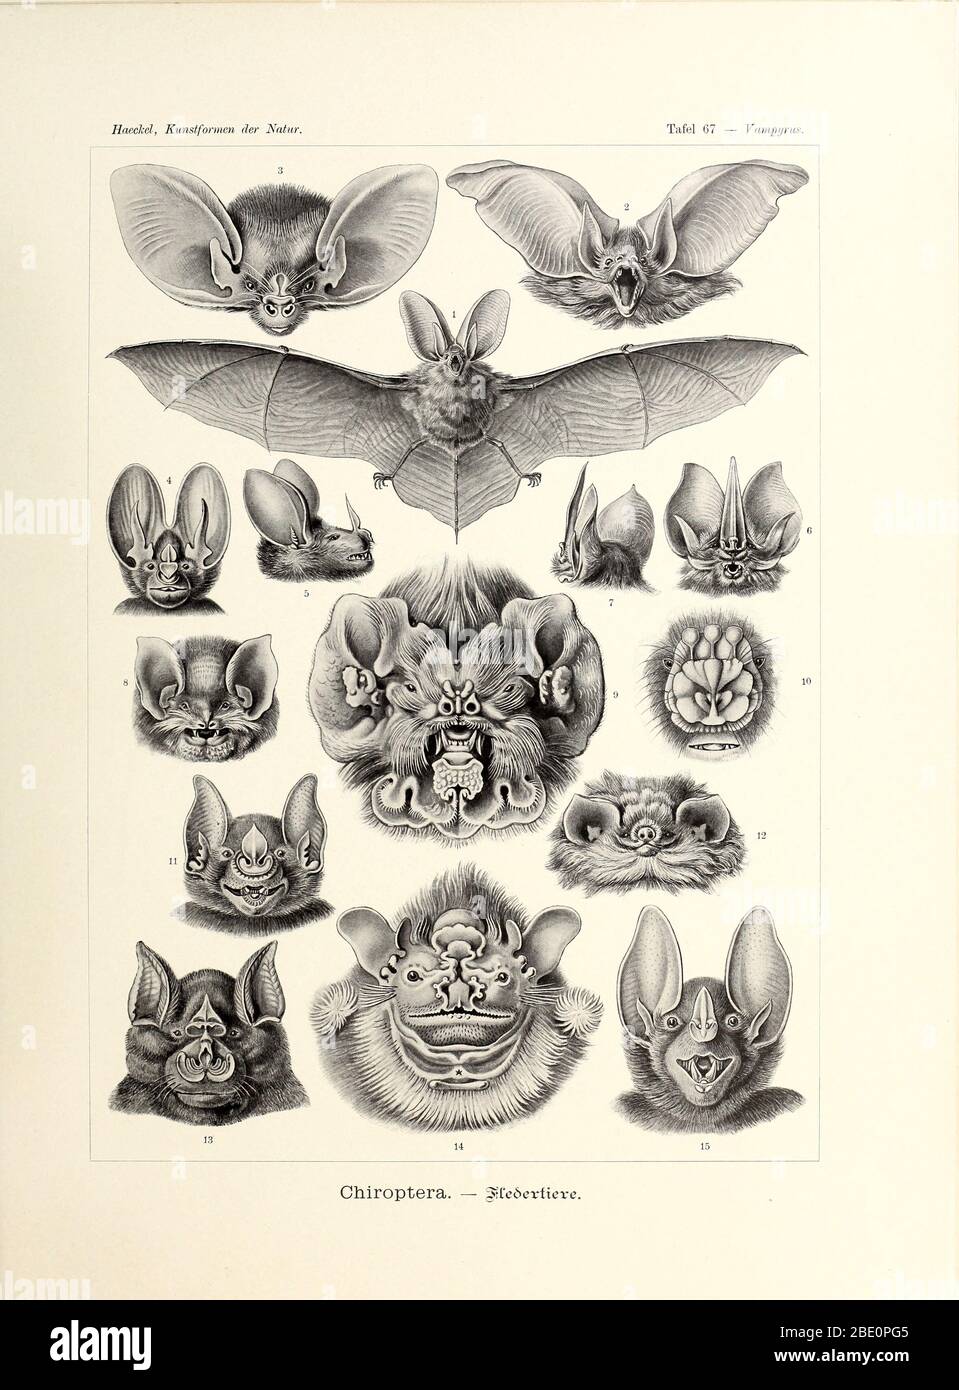 Bat (Chiroptera) di Ernst Haeckel's Kunstformen der Natur, 1904 Foto Stock